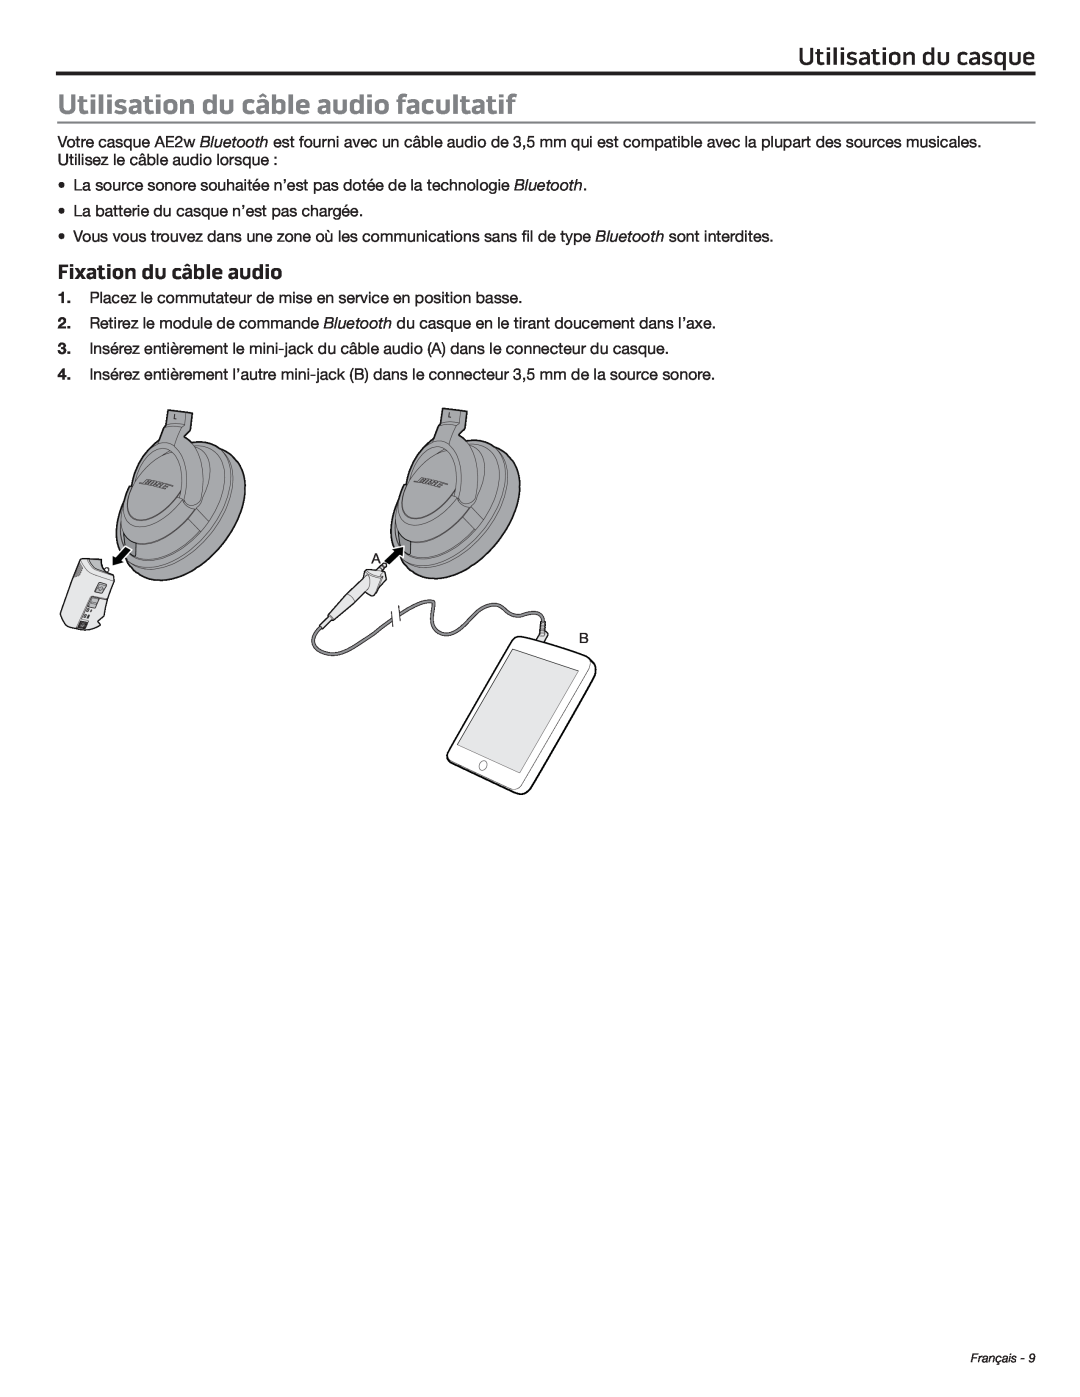 Bose AE2W manual Utilisation du câble audio facultatif, Fixation du câble audio, Utilisation du casque 